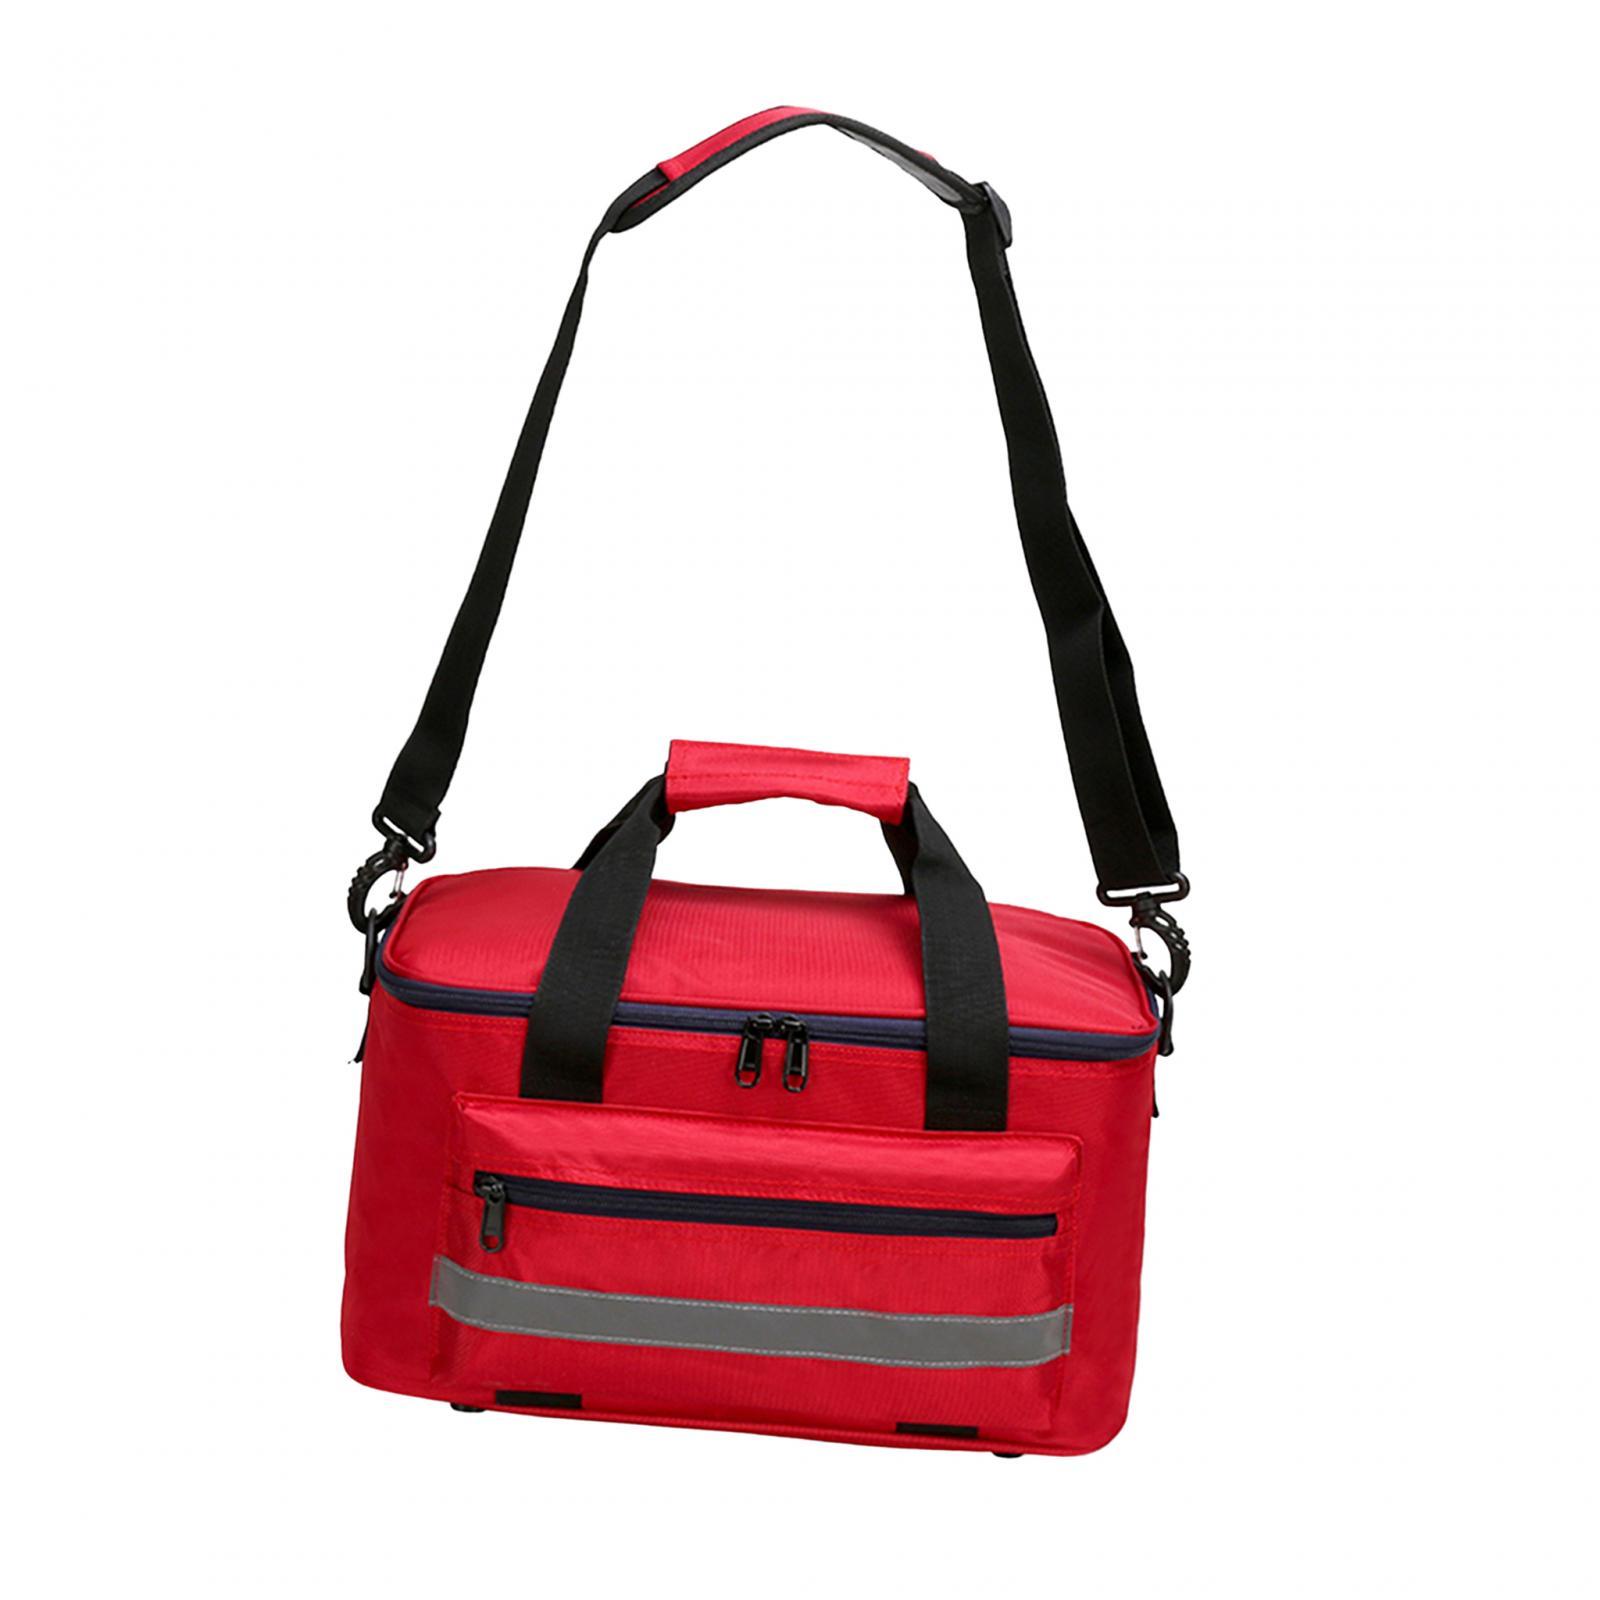 Baosity First Aid Kit Bag Jump Bag Emergency Storage Bag for Camping Travel